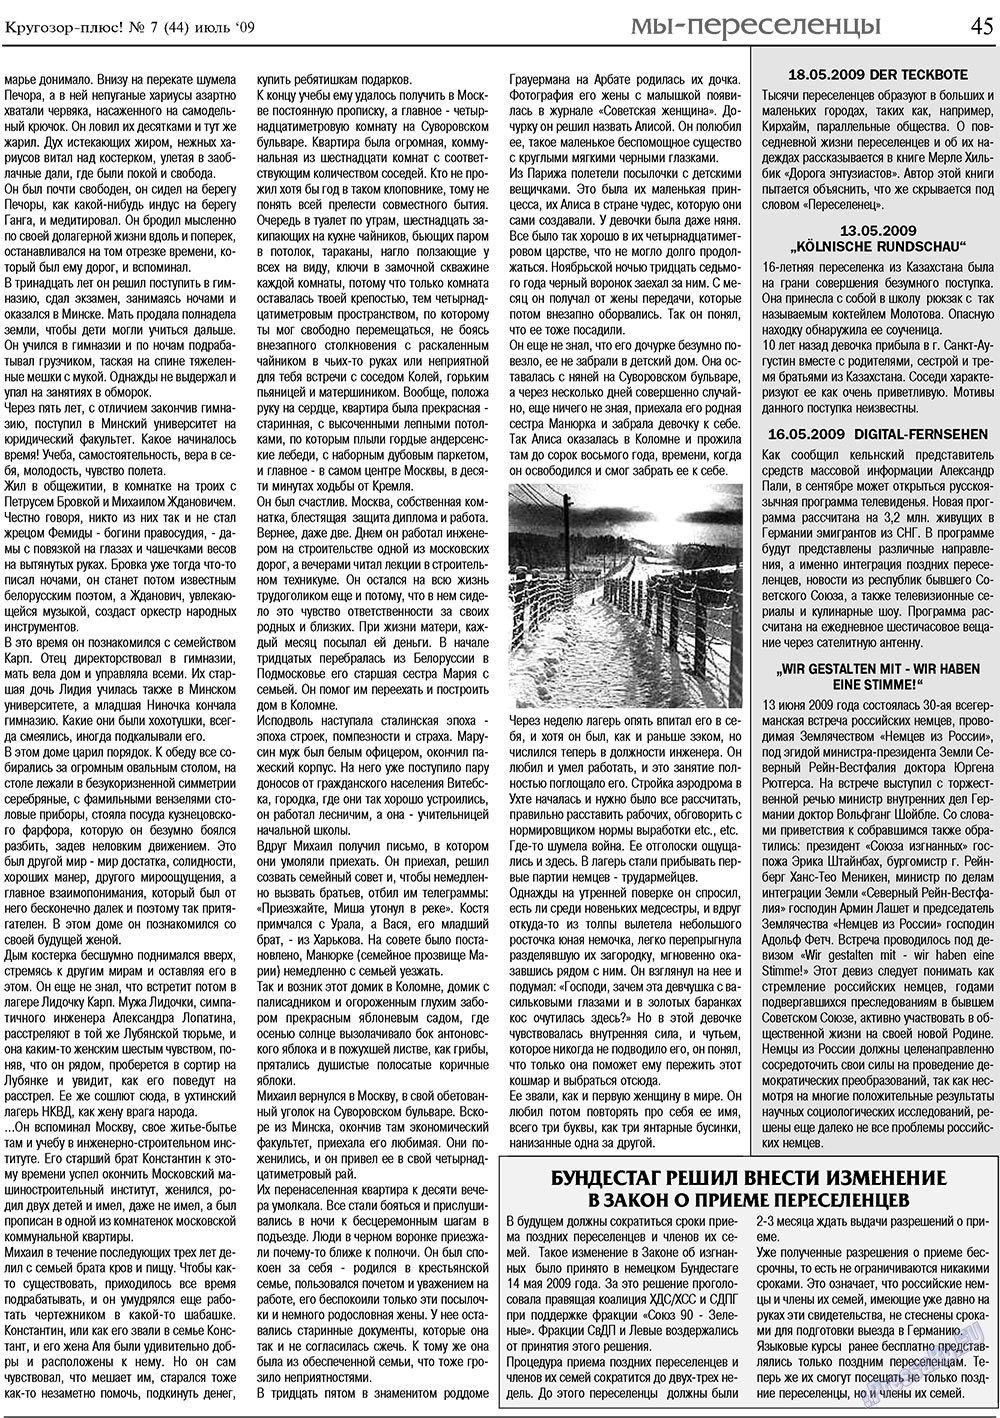 Кругозор плюс! (газета). 2009 год, номер 7, стр. 45